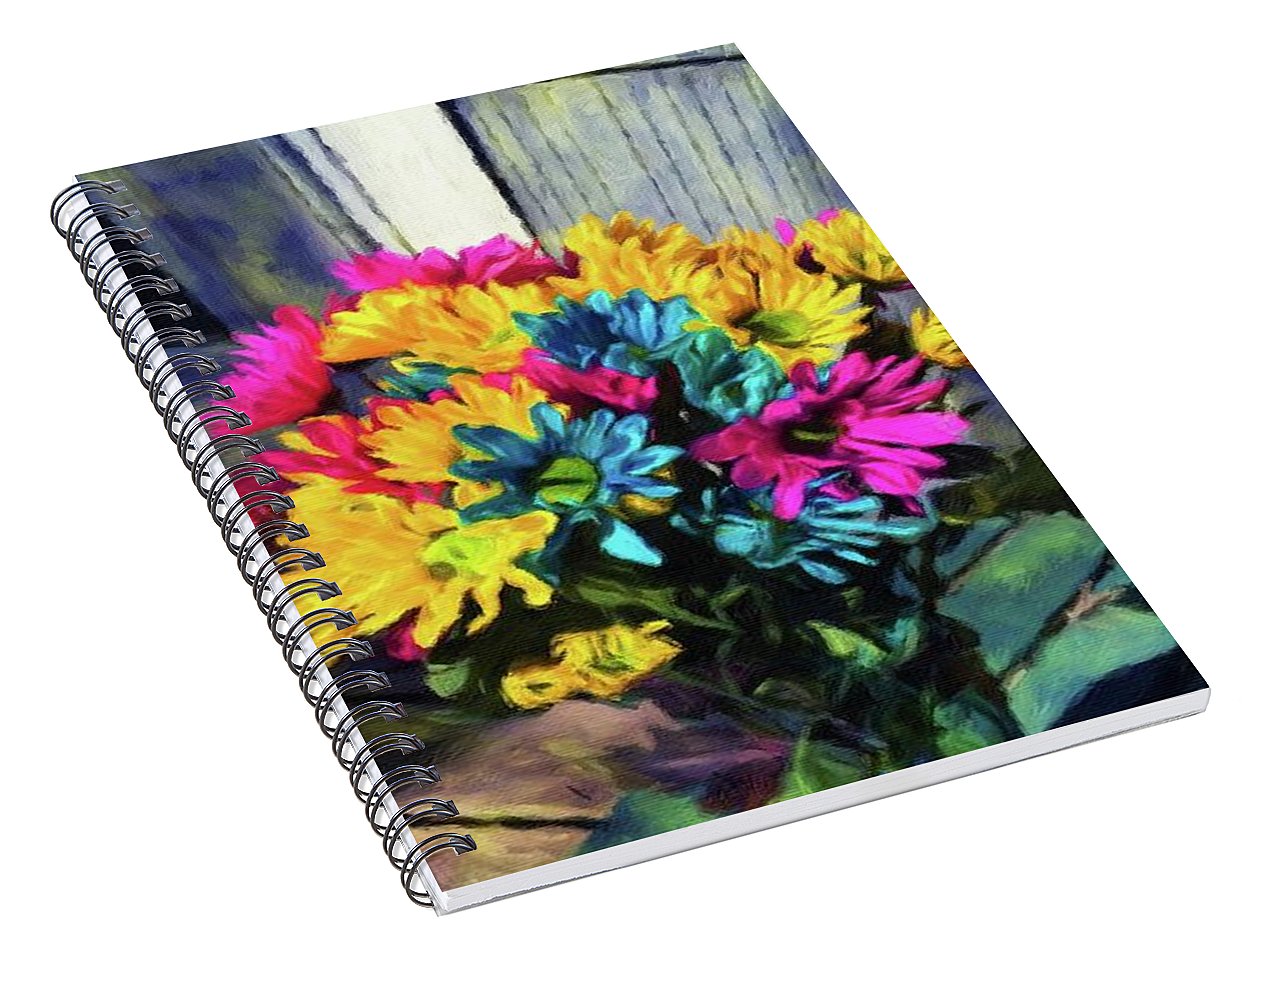 Flowers At The Door - Spiral Notebook